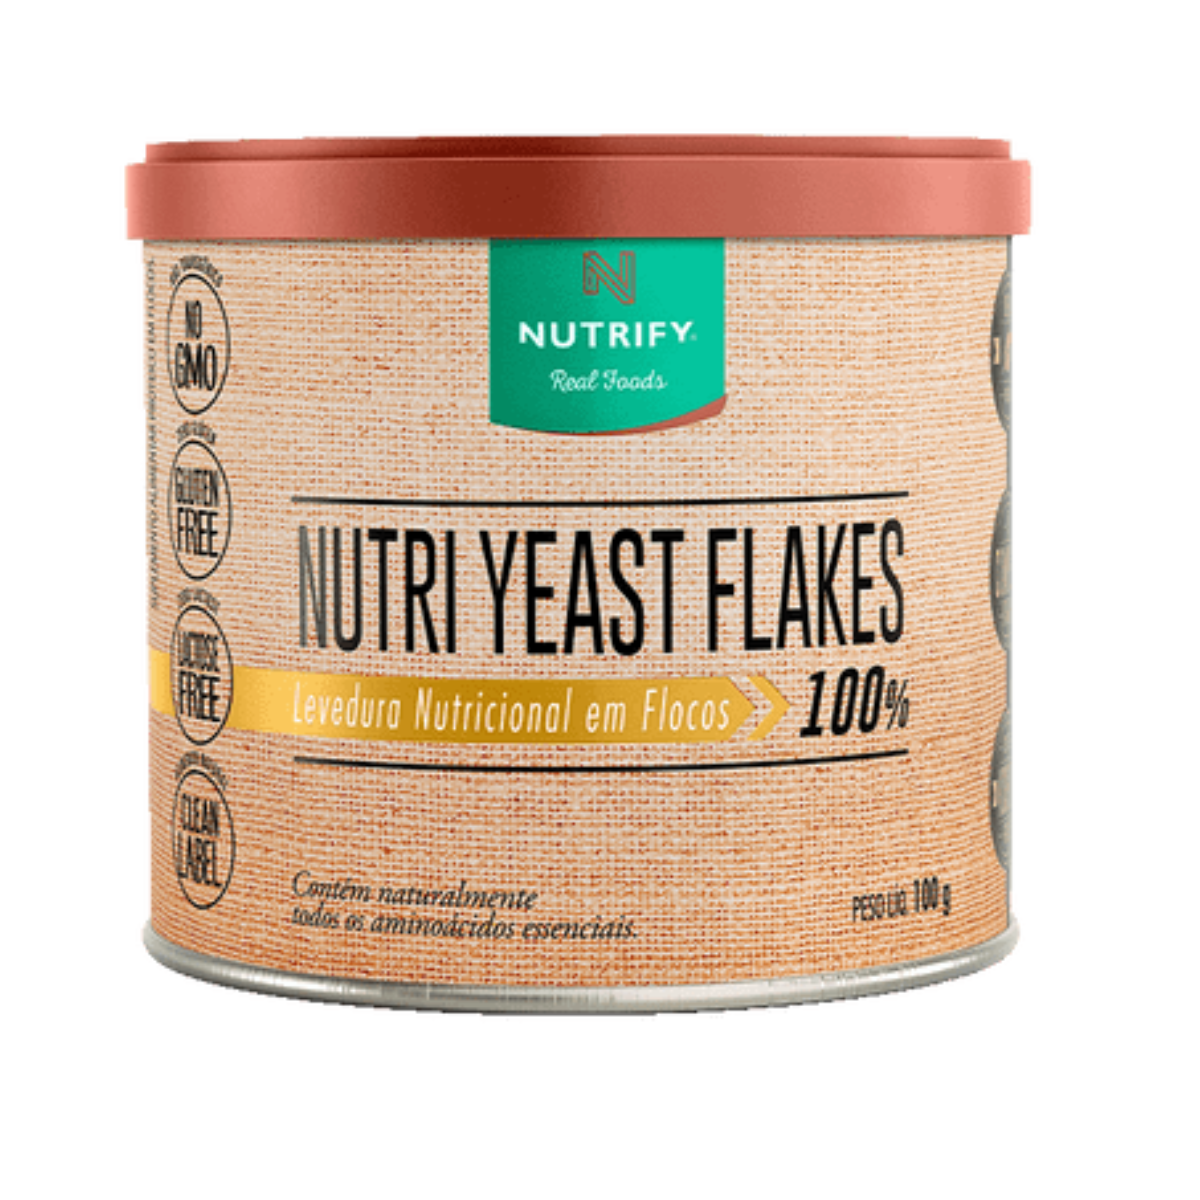 NUTRI YEAST FLAKES 100G - Nutrify